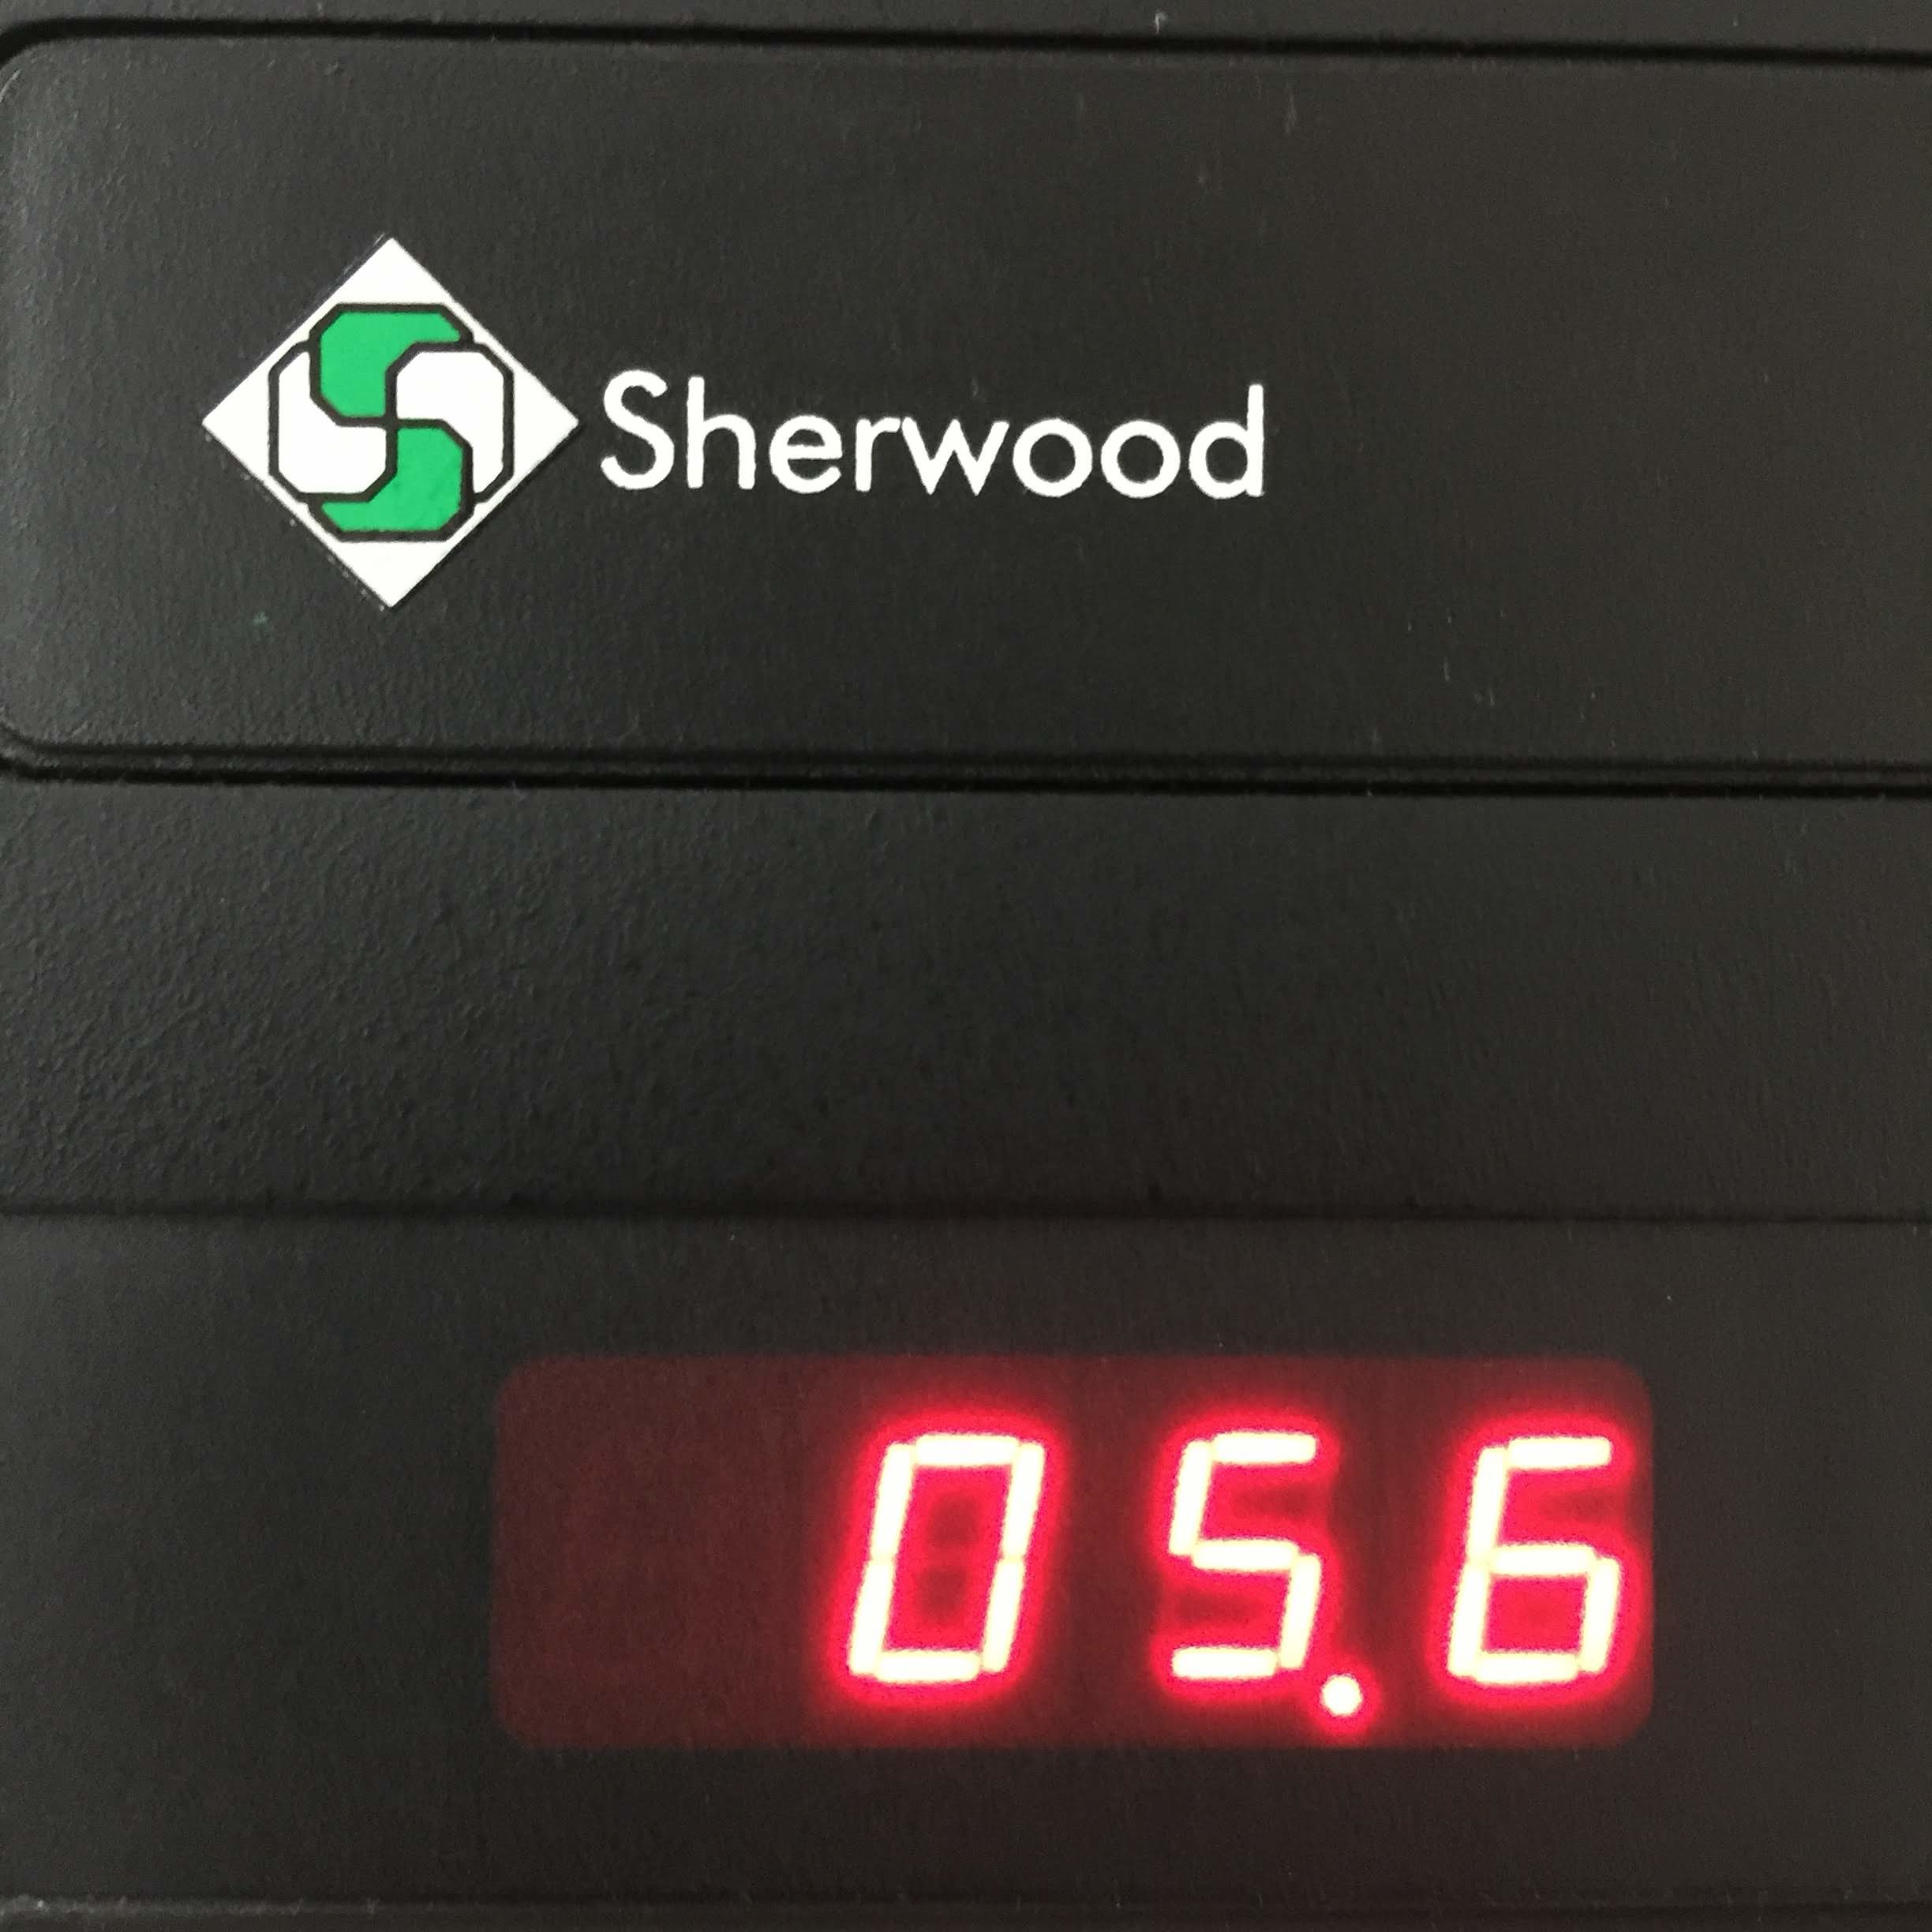 sherwood scientific model 410 flame photometer